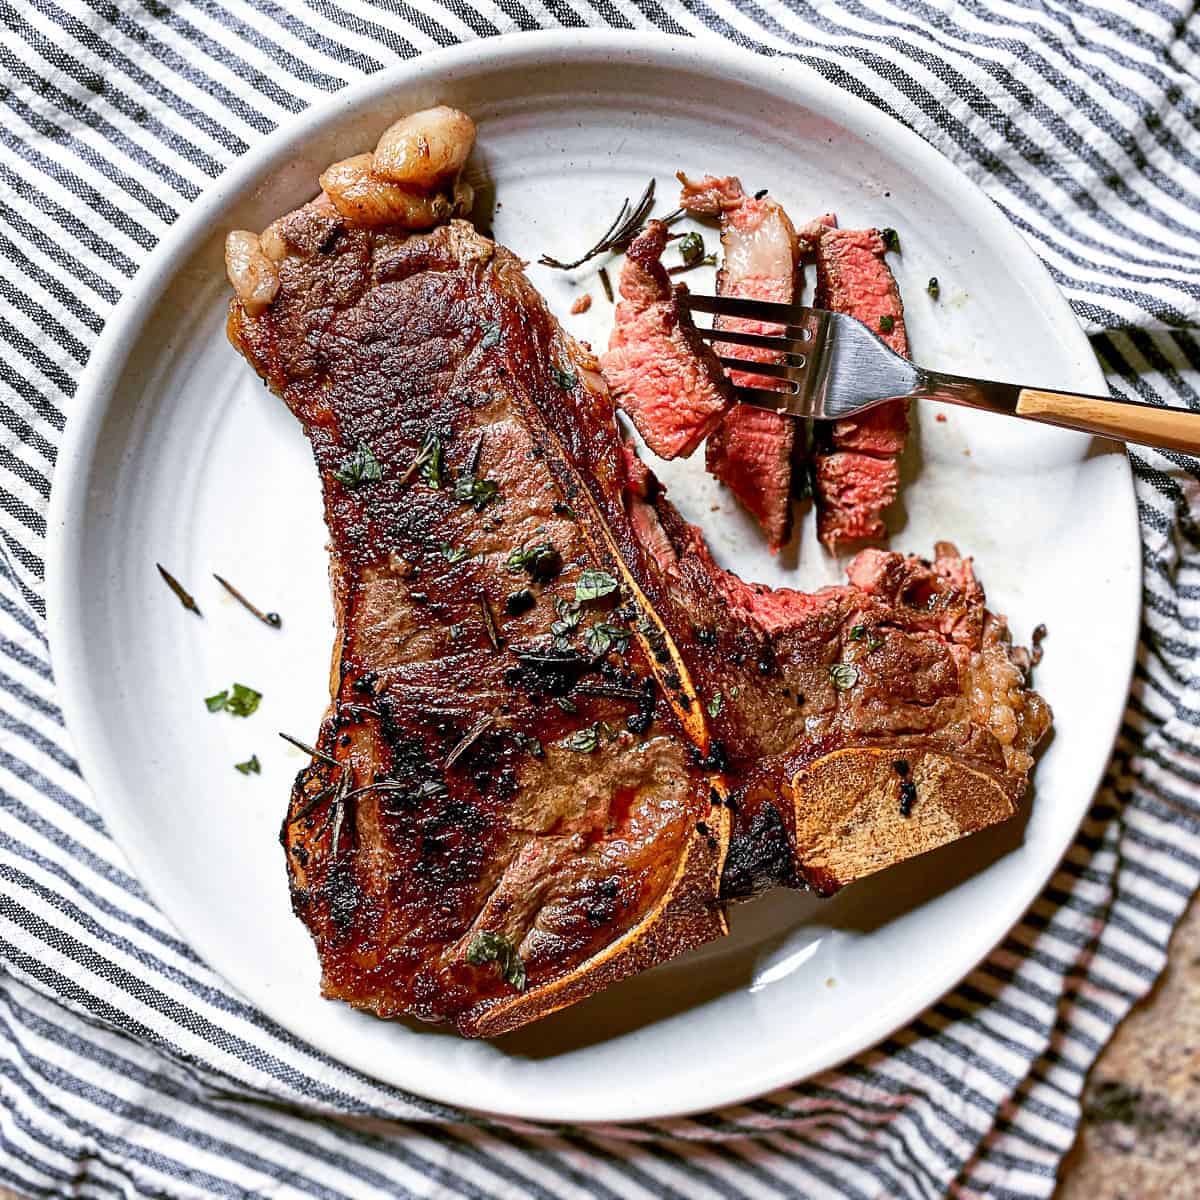 https://sipbitego.com/wp-content/uploads/2020/12/Sous-Vide-Porterhouse-Steak-Recipe-Sip-Bite-Go-31-sous-vide-porterhouse-steak-served-on-a-plate-feature-1.jpg